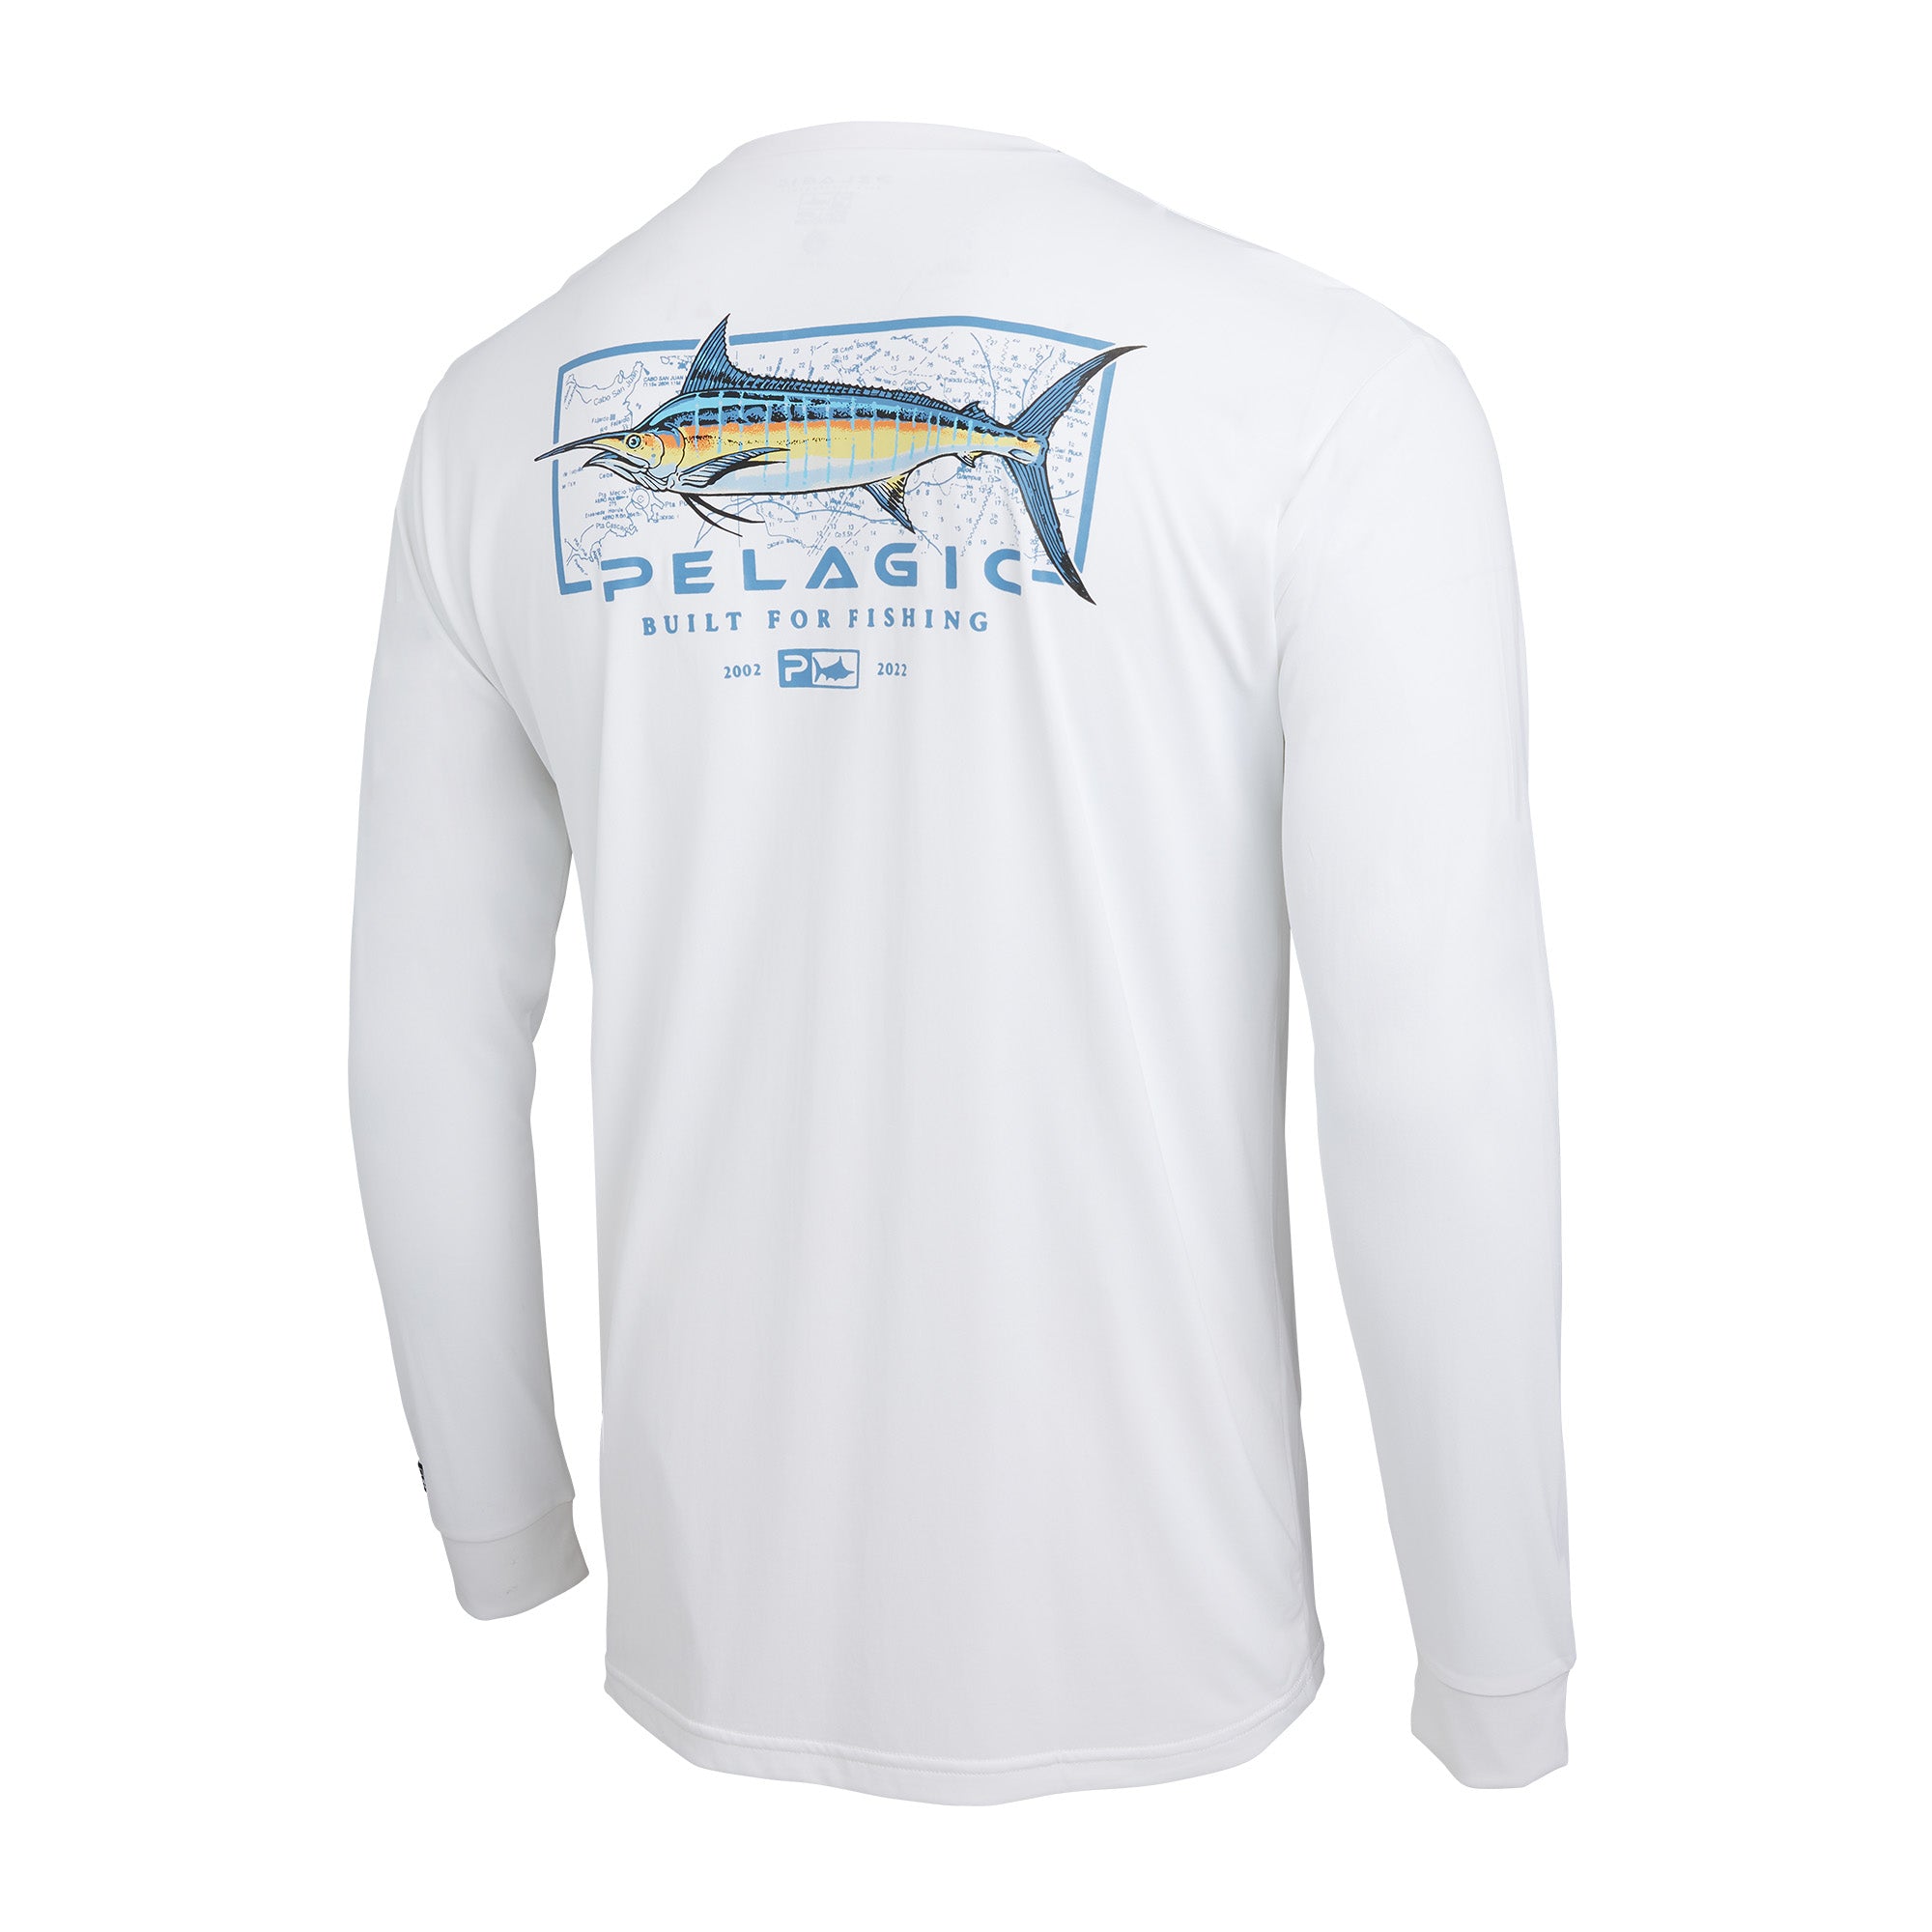 Bill Fish Gear Mens Long Sleeve Fishing Hoodie Shirts Fishing